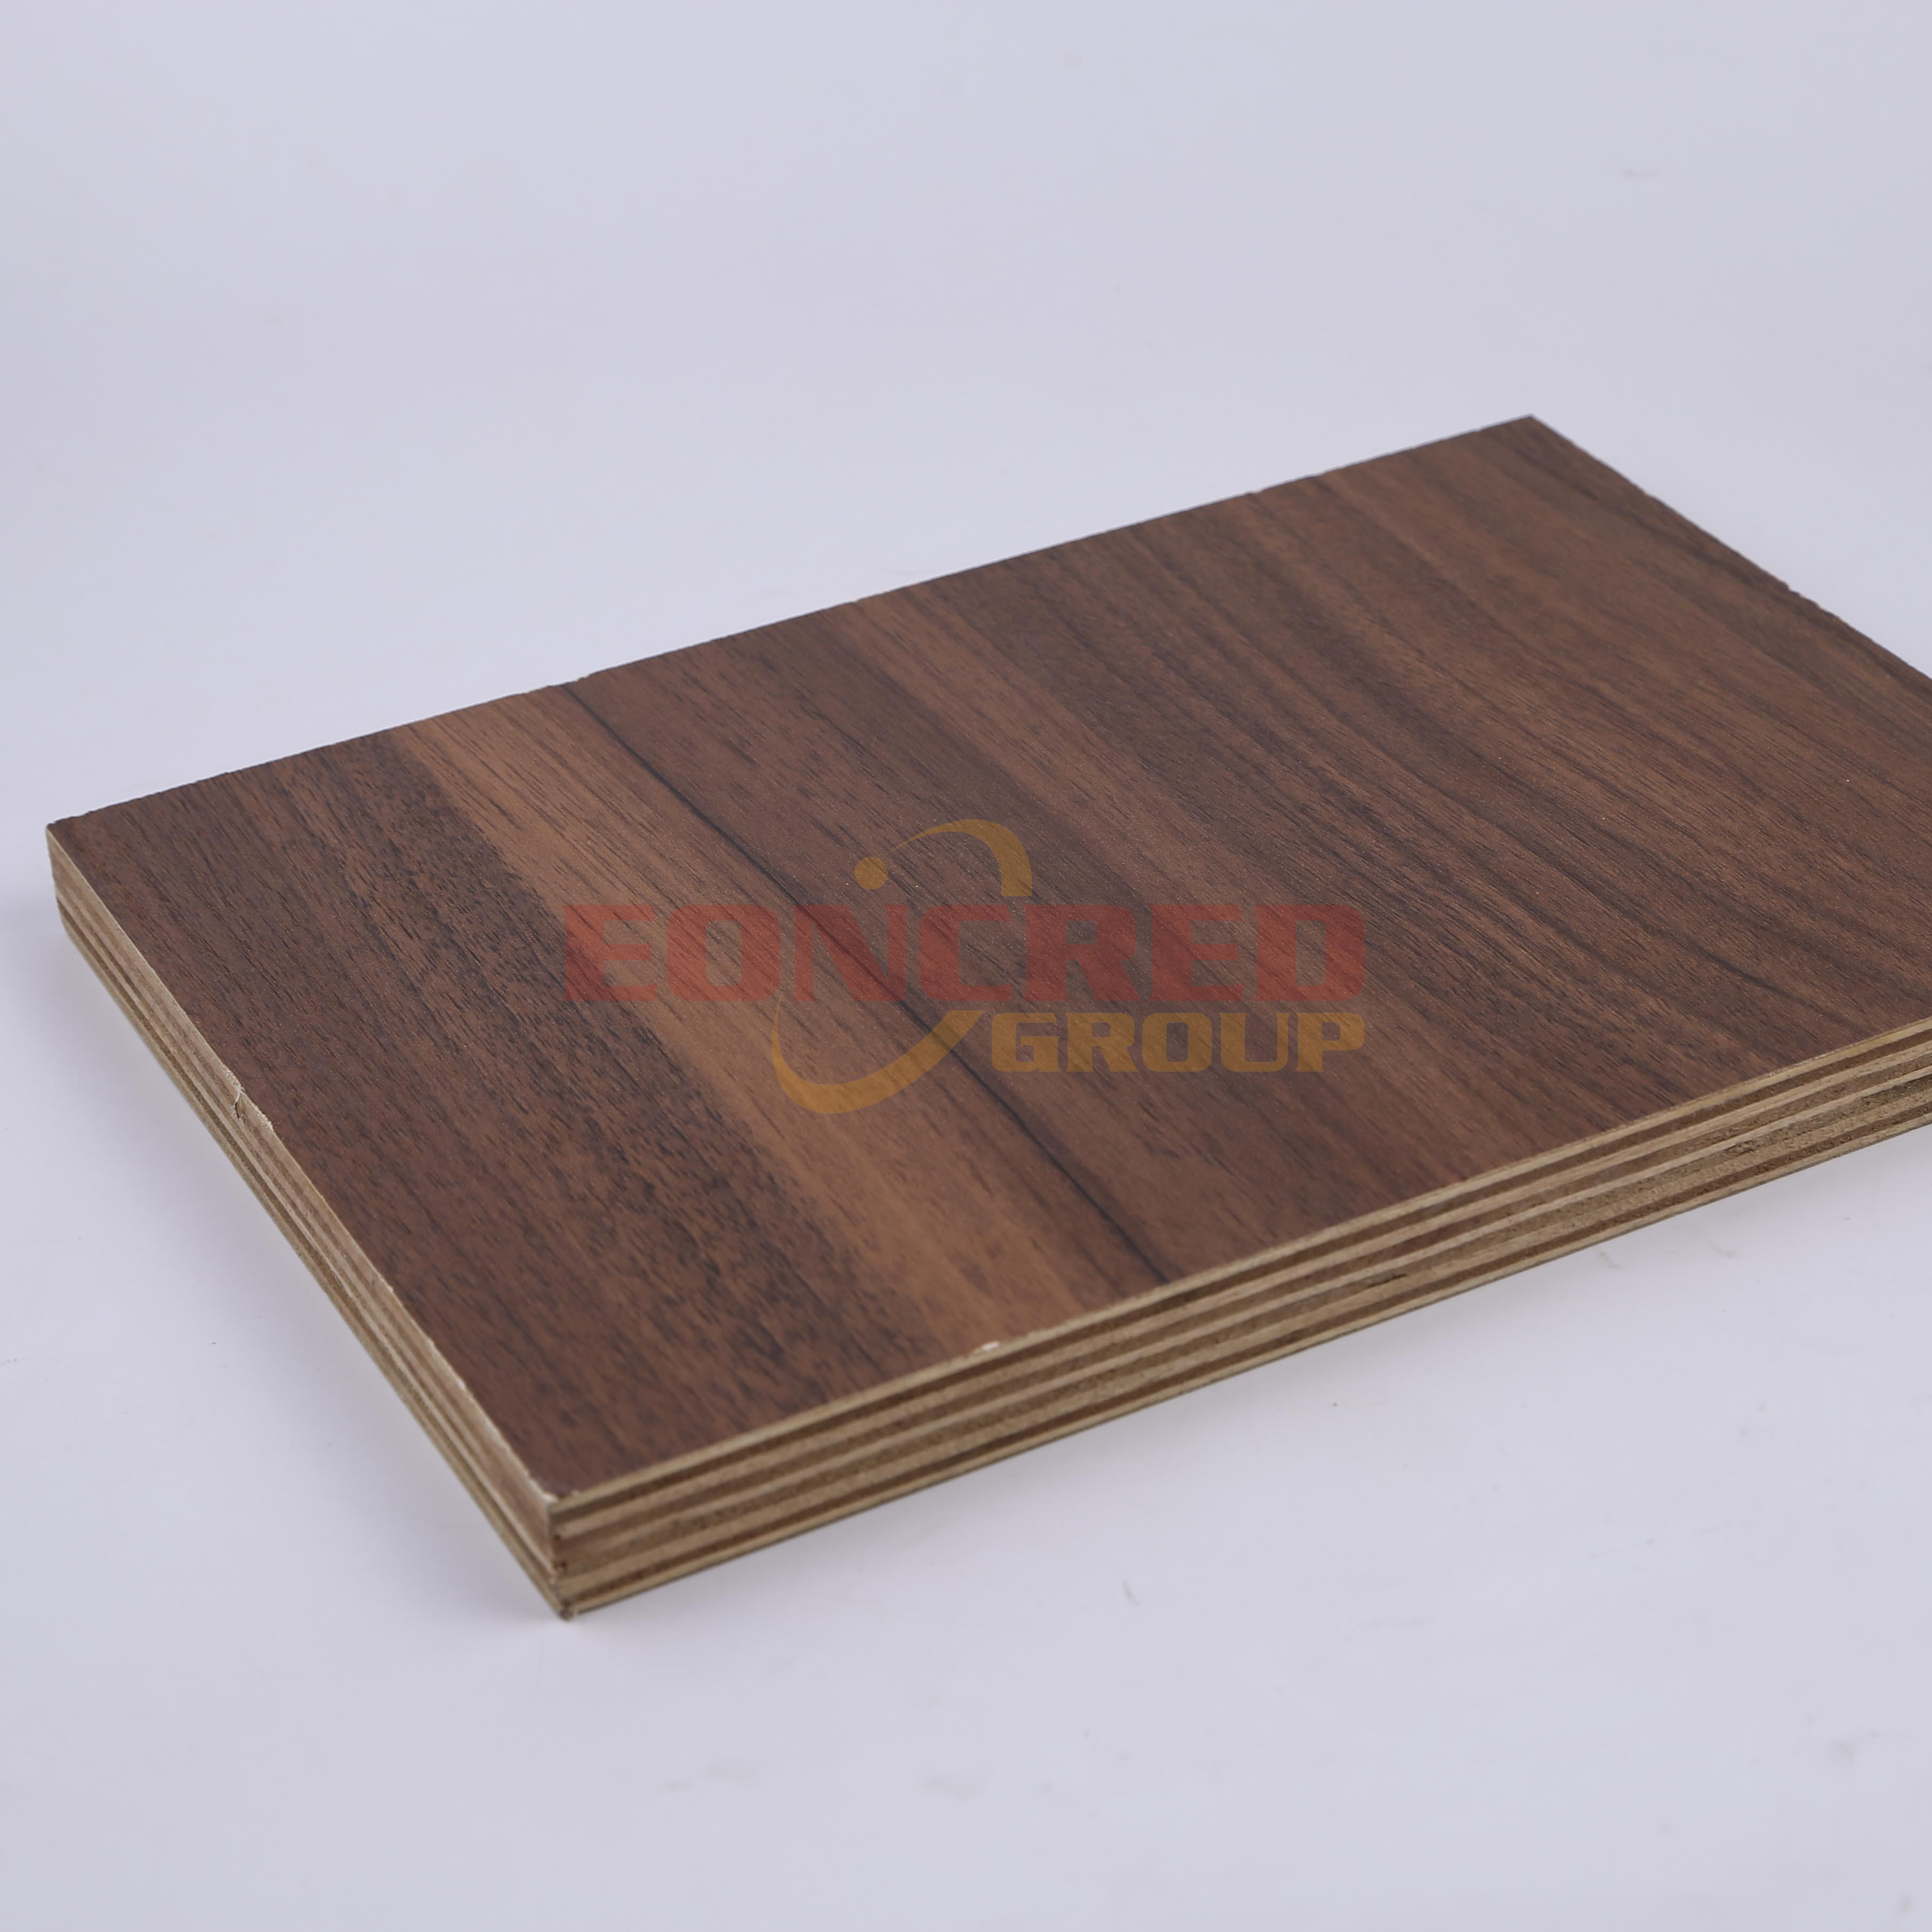 Laminated Plywood Price Door Wood Furniture Kitchen Cabinets